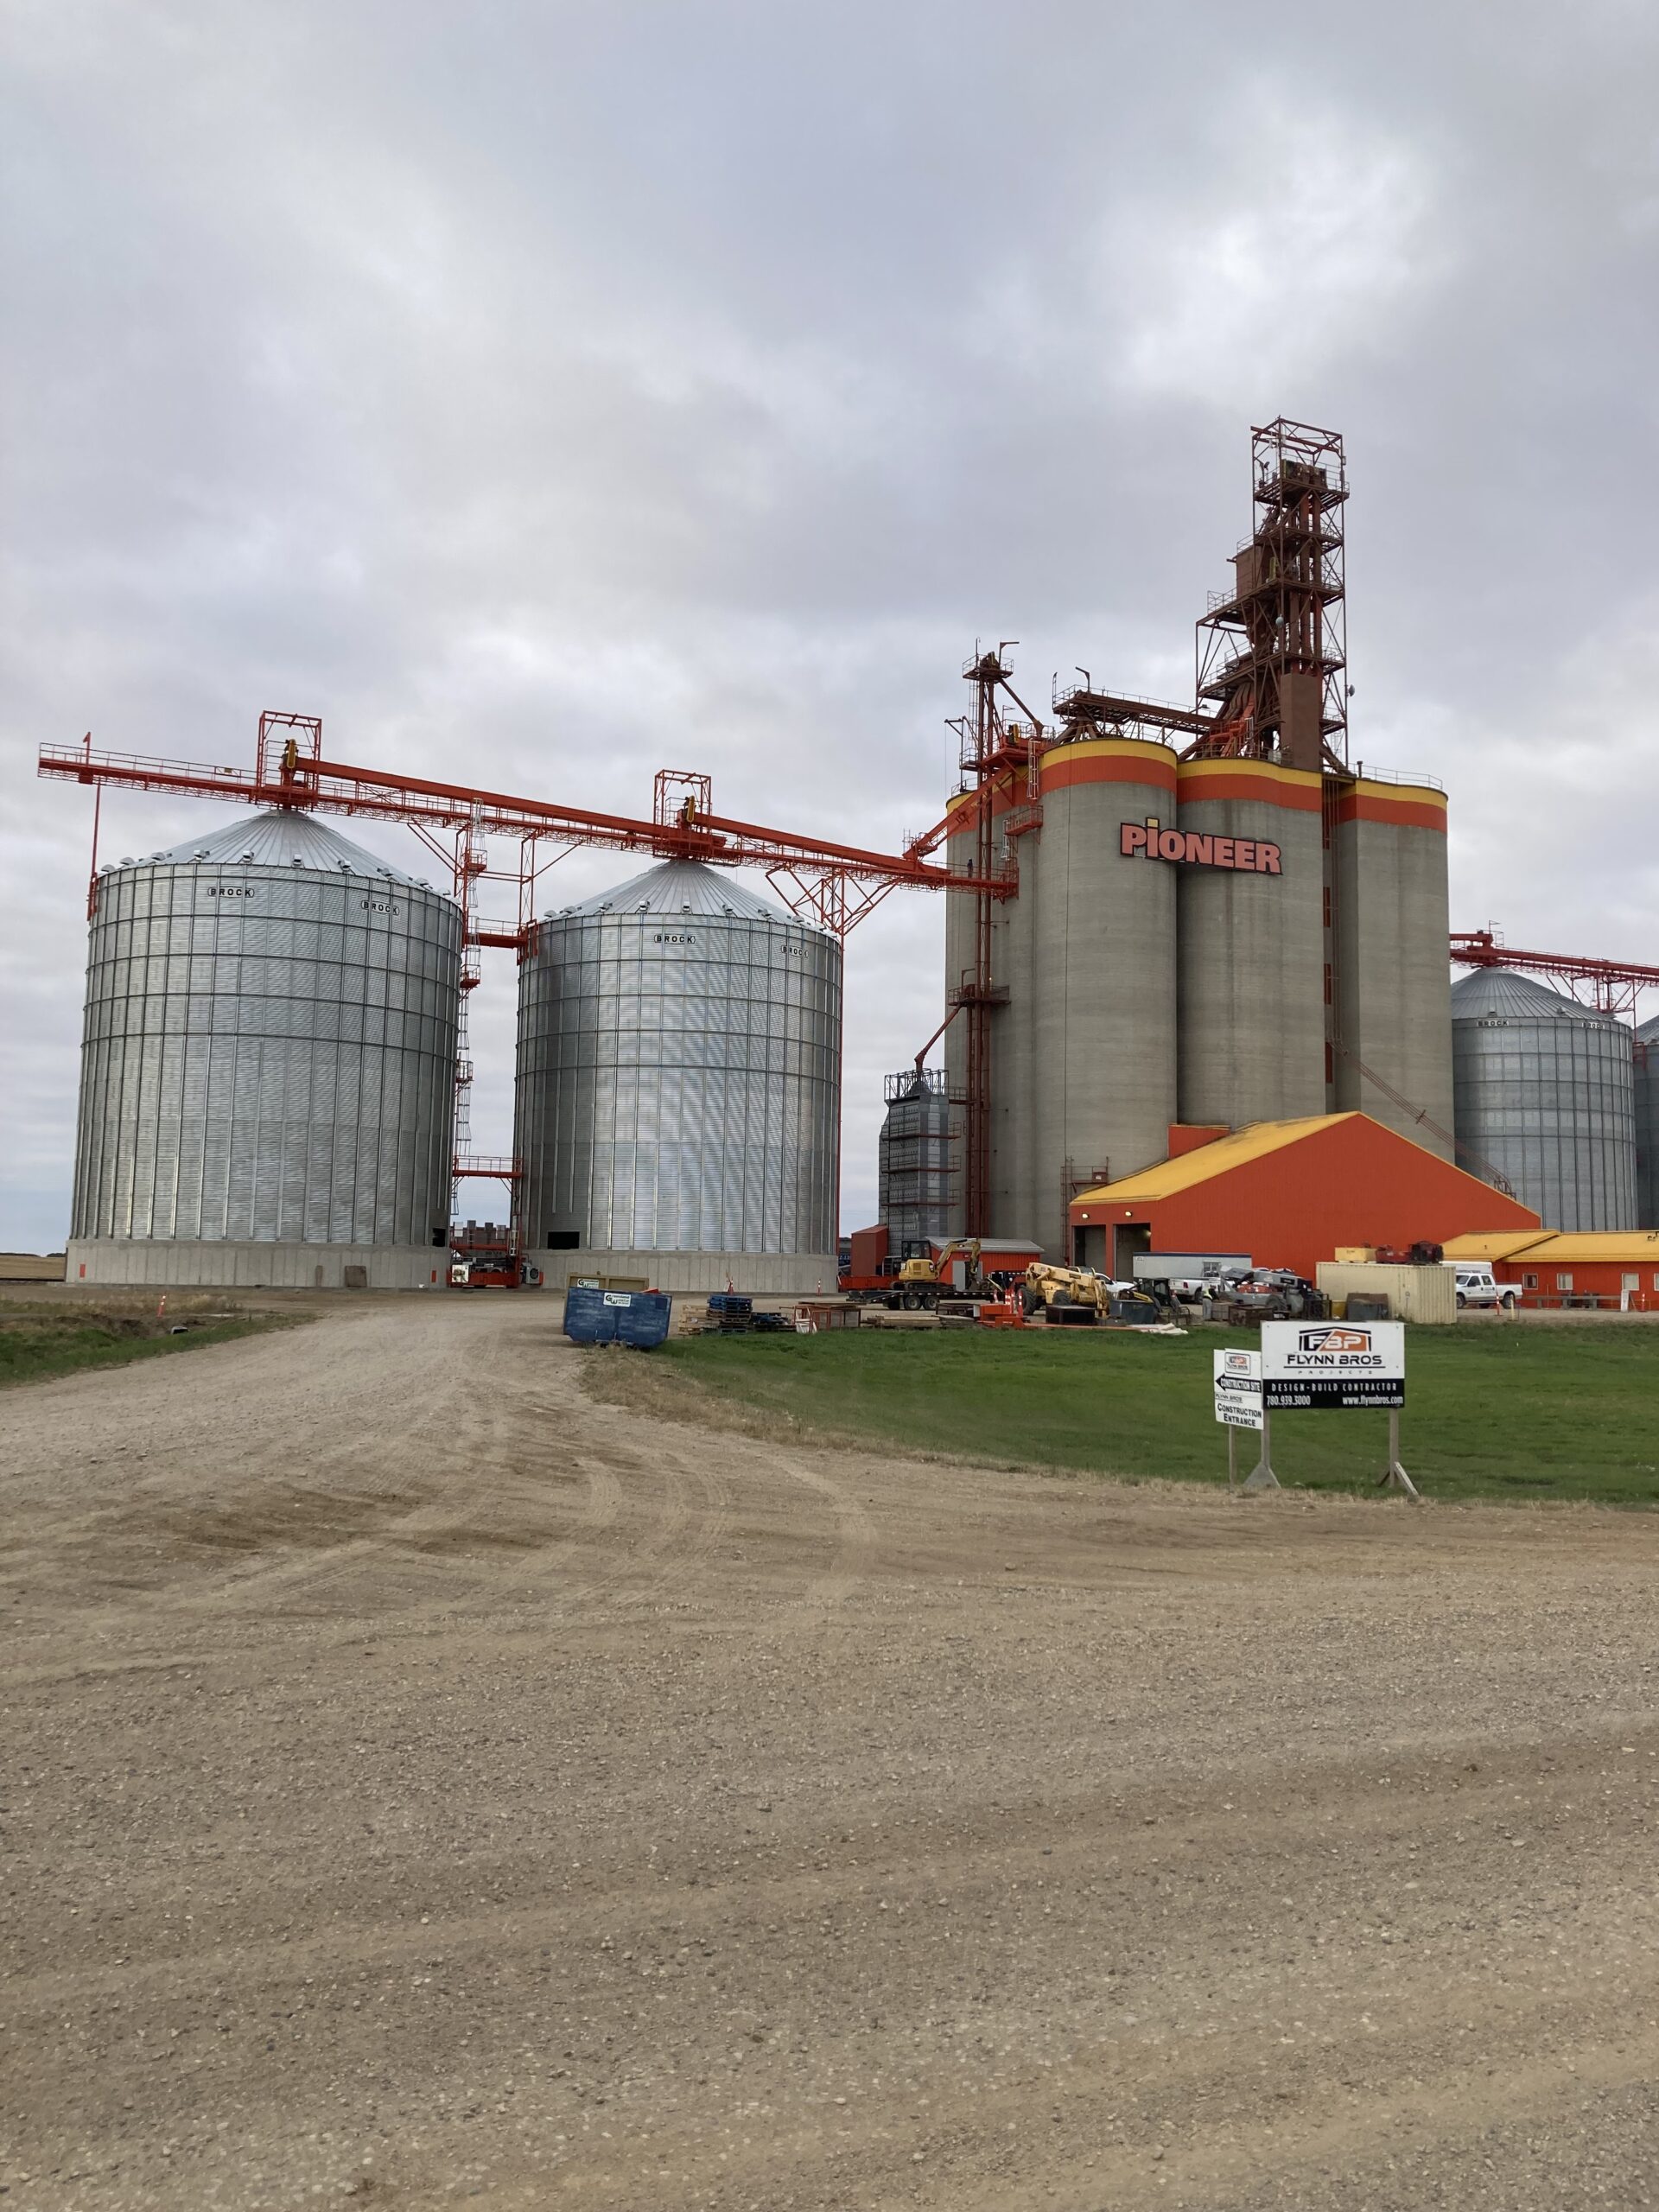 Richardson Pioneer grain storage system in Melfort, SK.